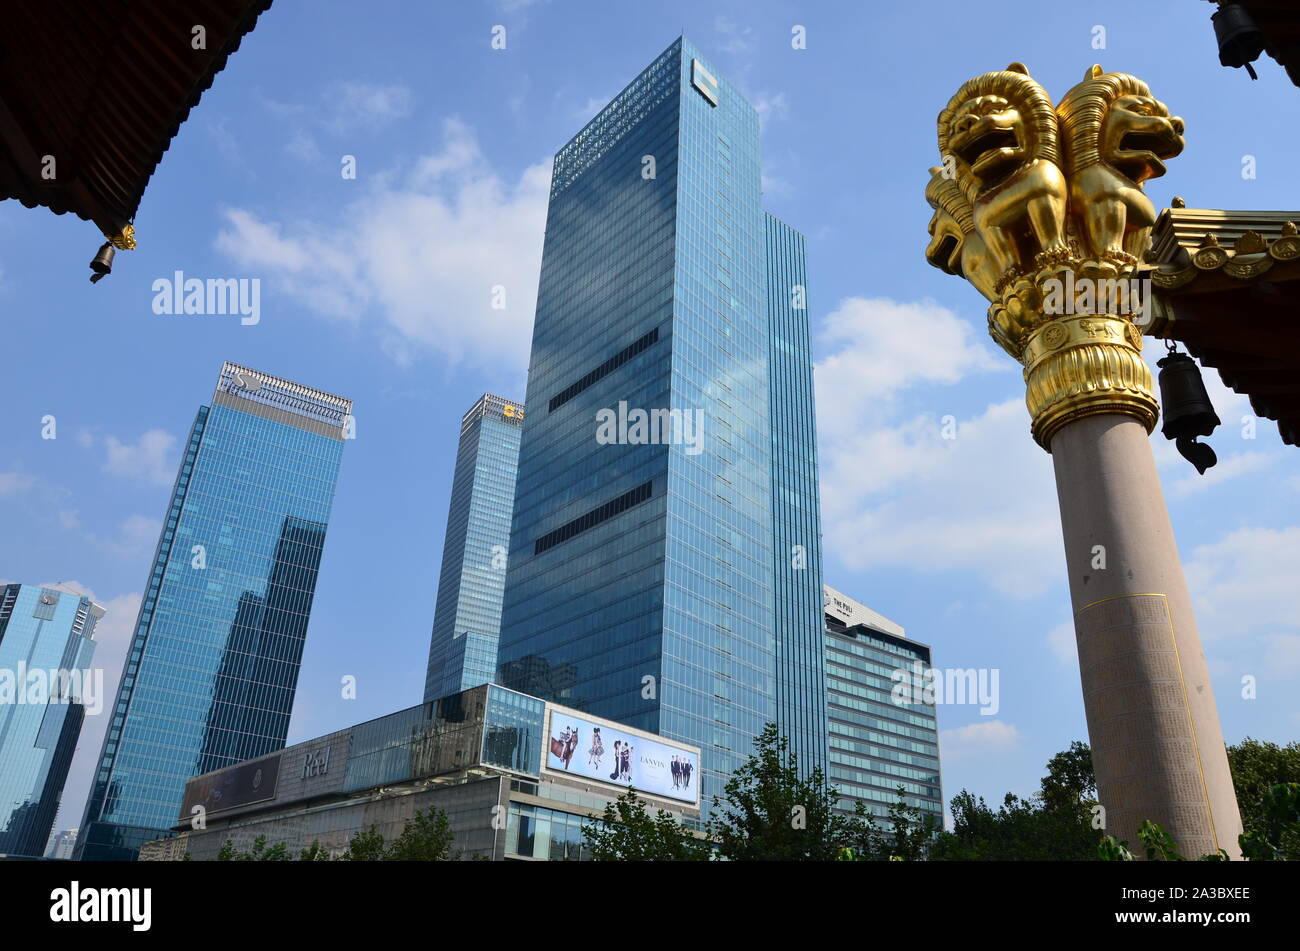 The view of skyscraper in the city Stock Photo